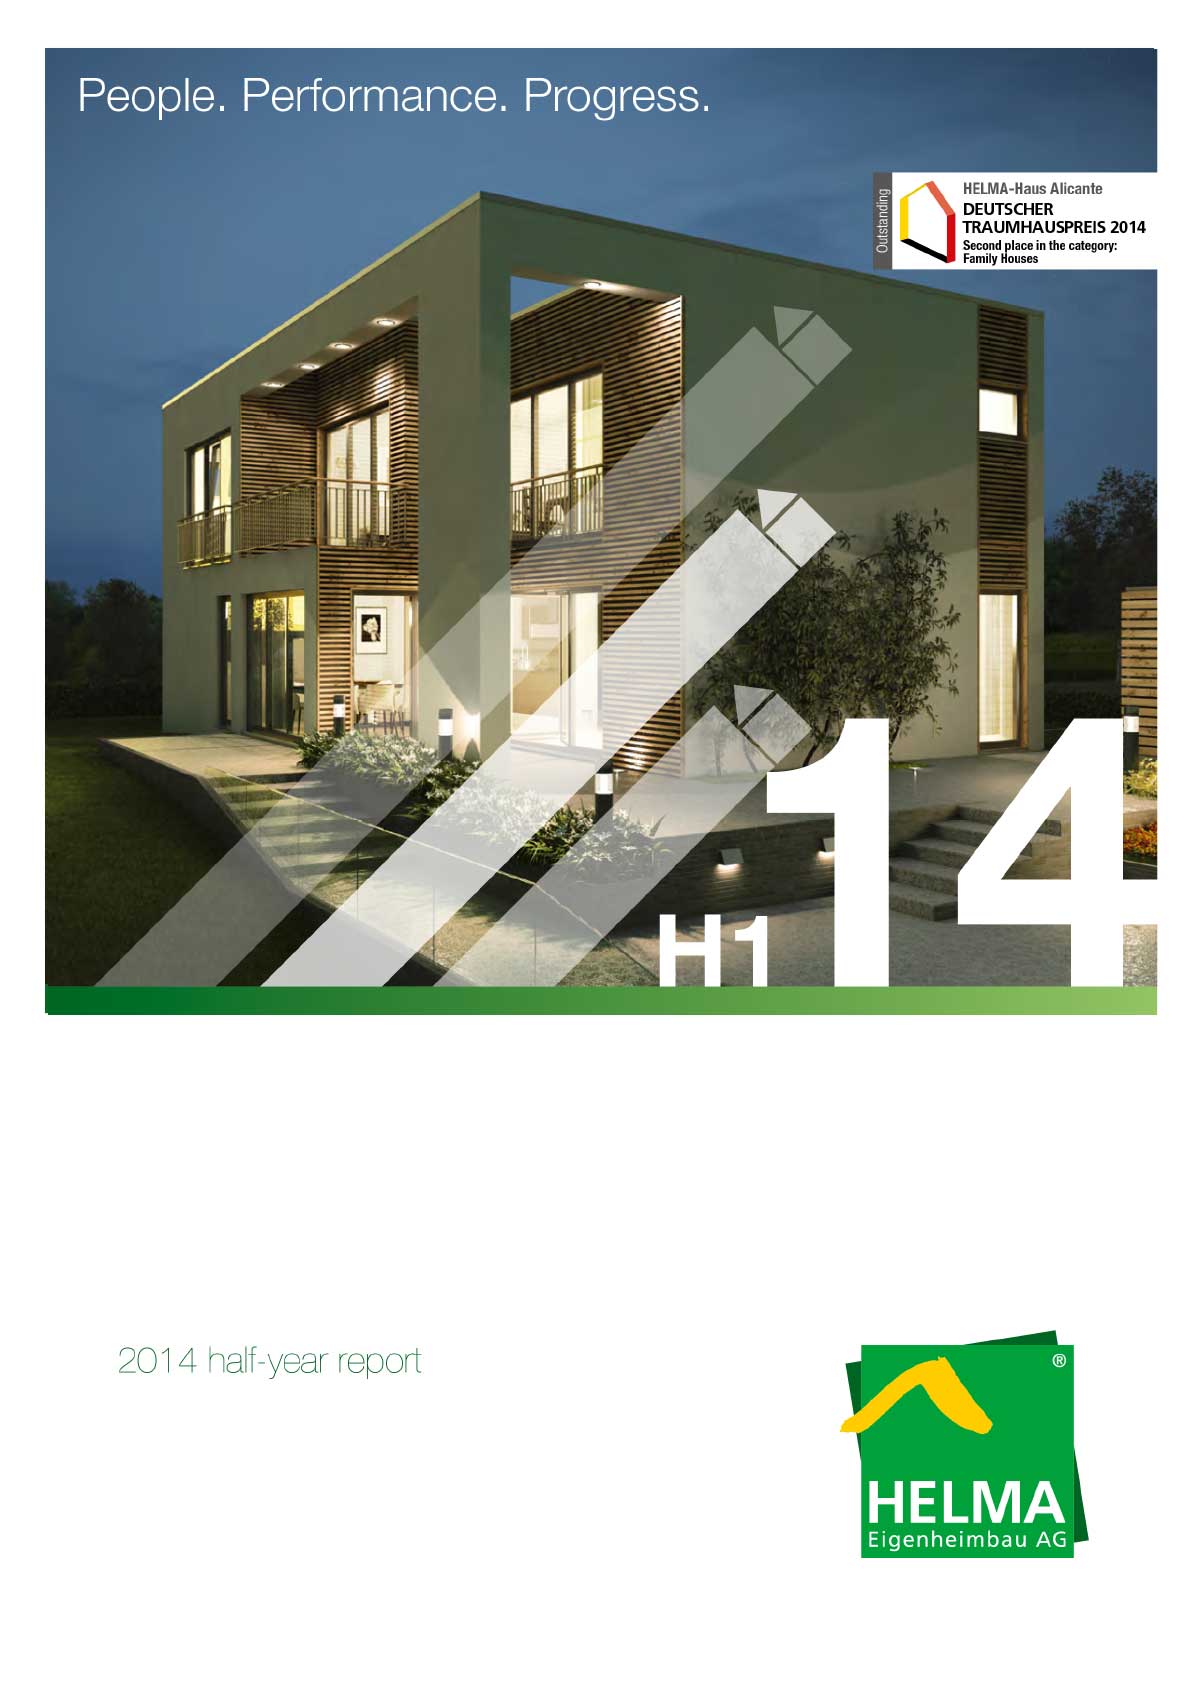 Half-year report 2014